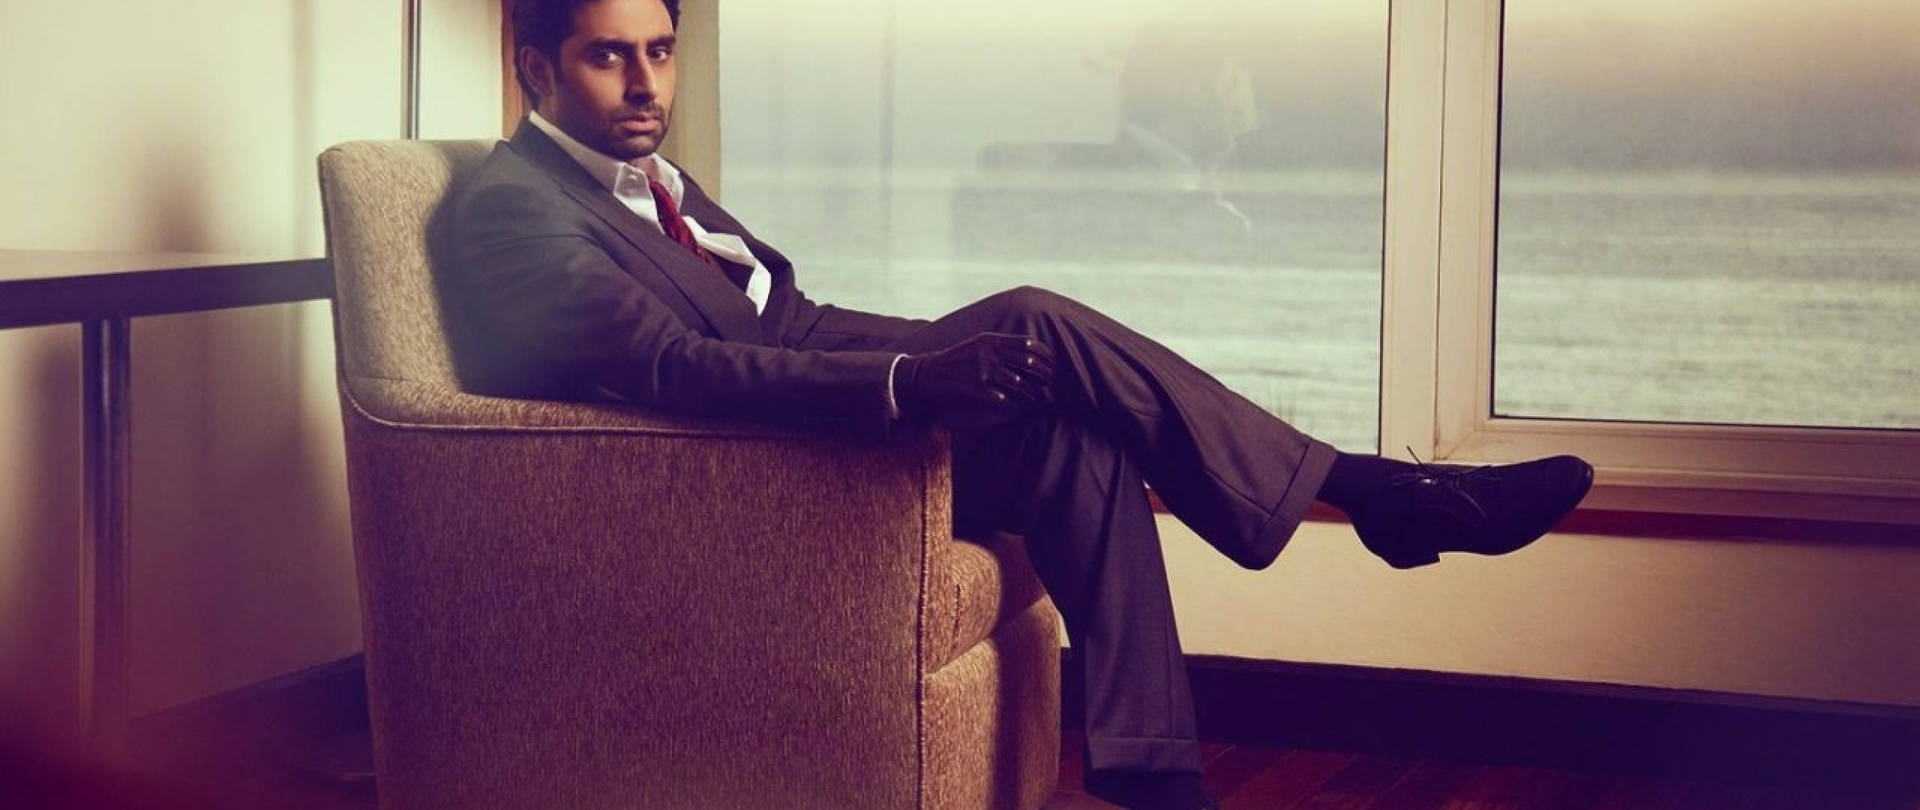 Abhishek Bachchan sidder på sofaen Wallpaper